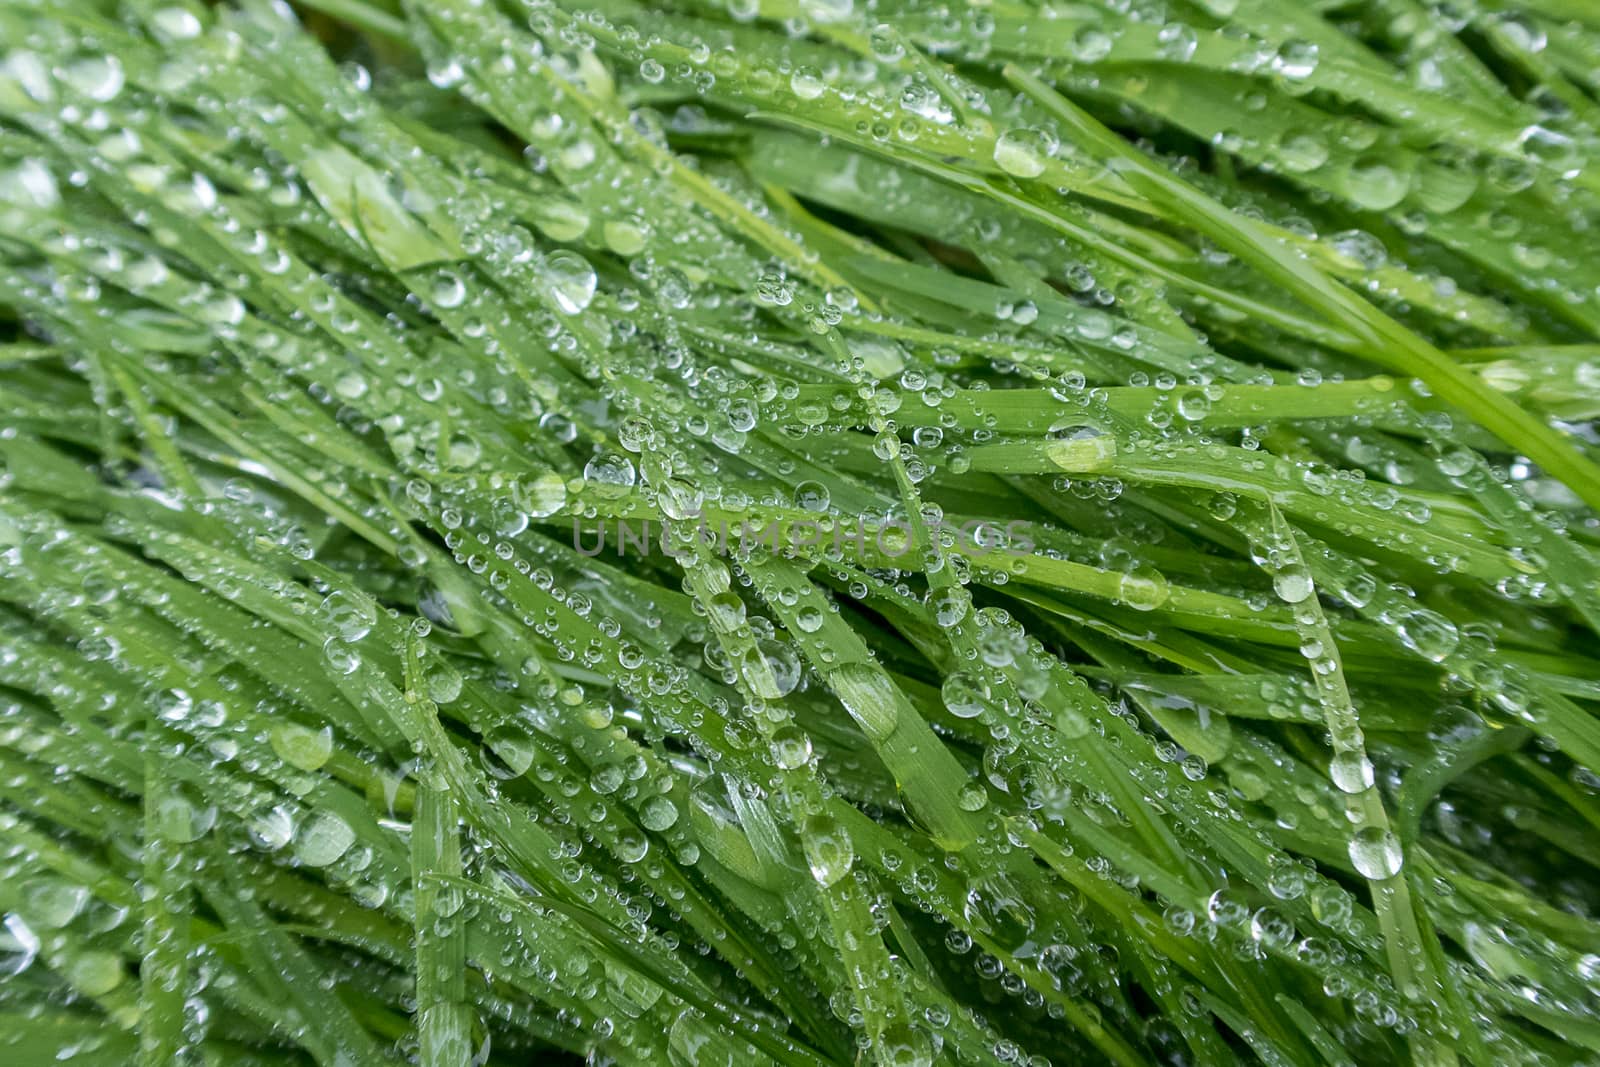 Close up of blades of wet grass